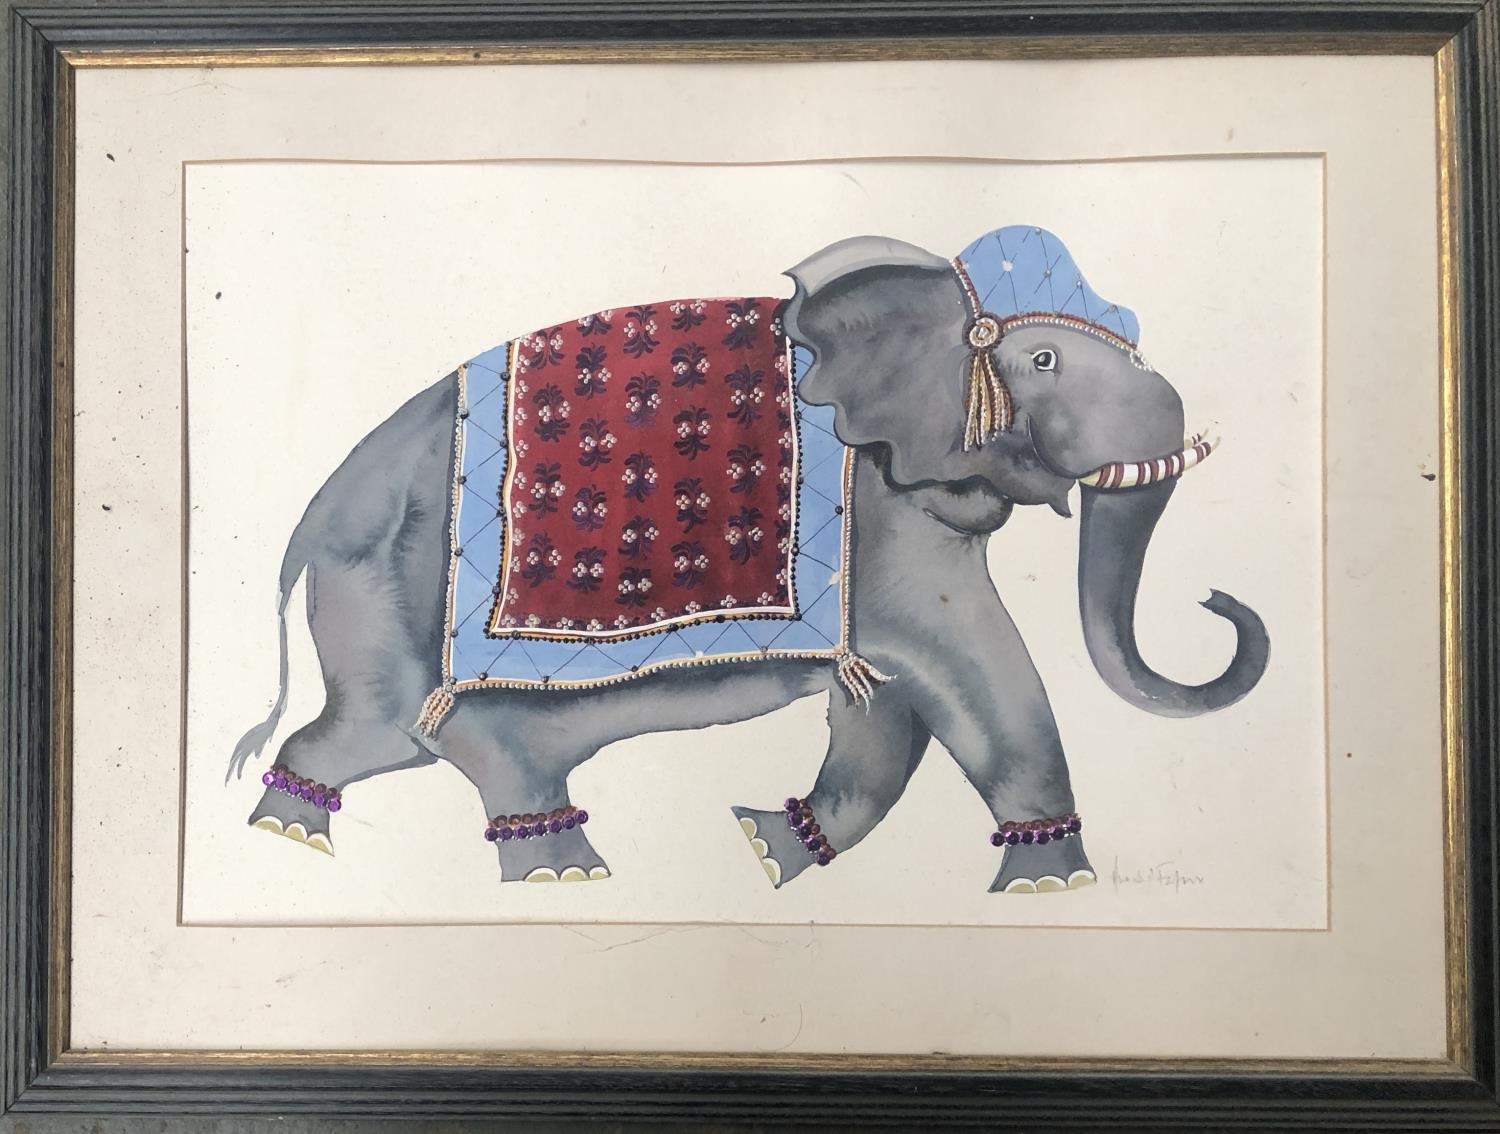 Annabel Fairfax (b.1957), 'Raja' contemporary watercolour and mixed media of an elephant, 33x49cm